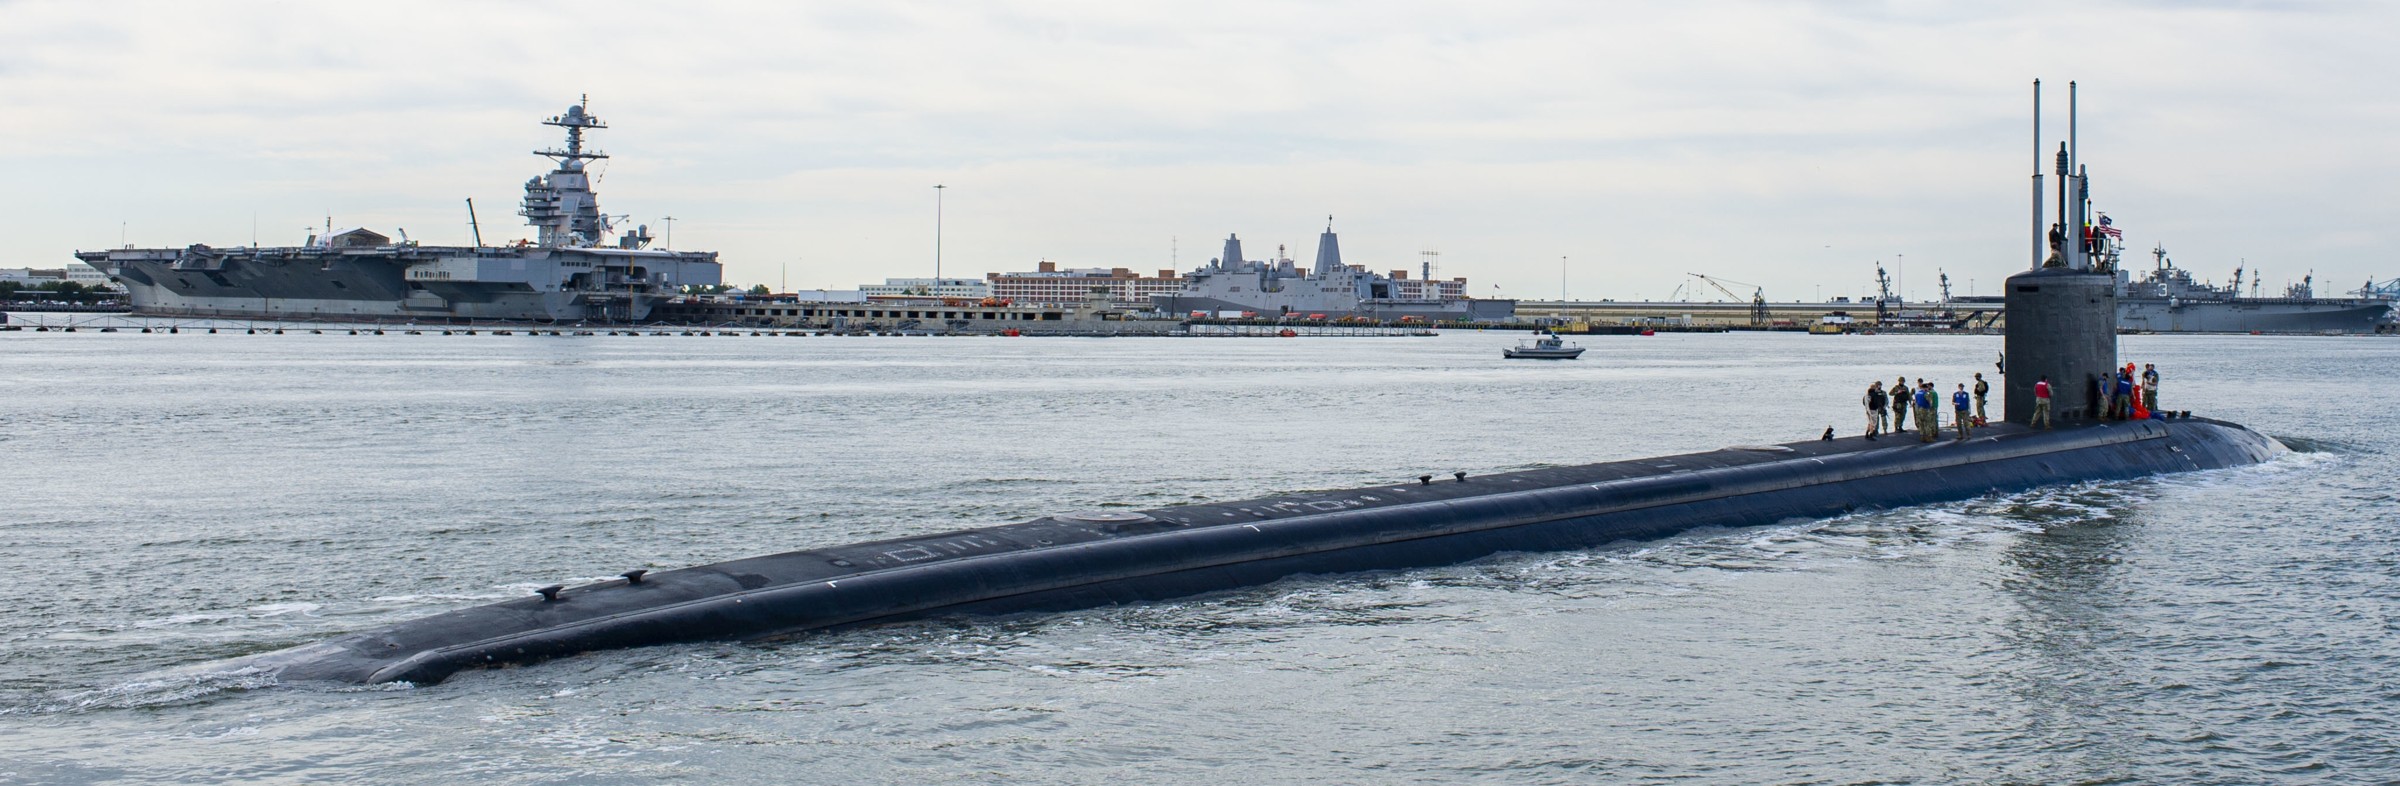 ssn-778 uss new hampshire virginia class attack submarine us navy 38